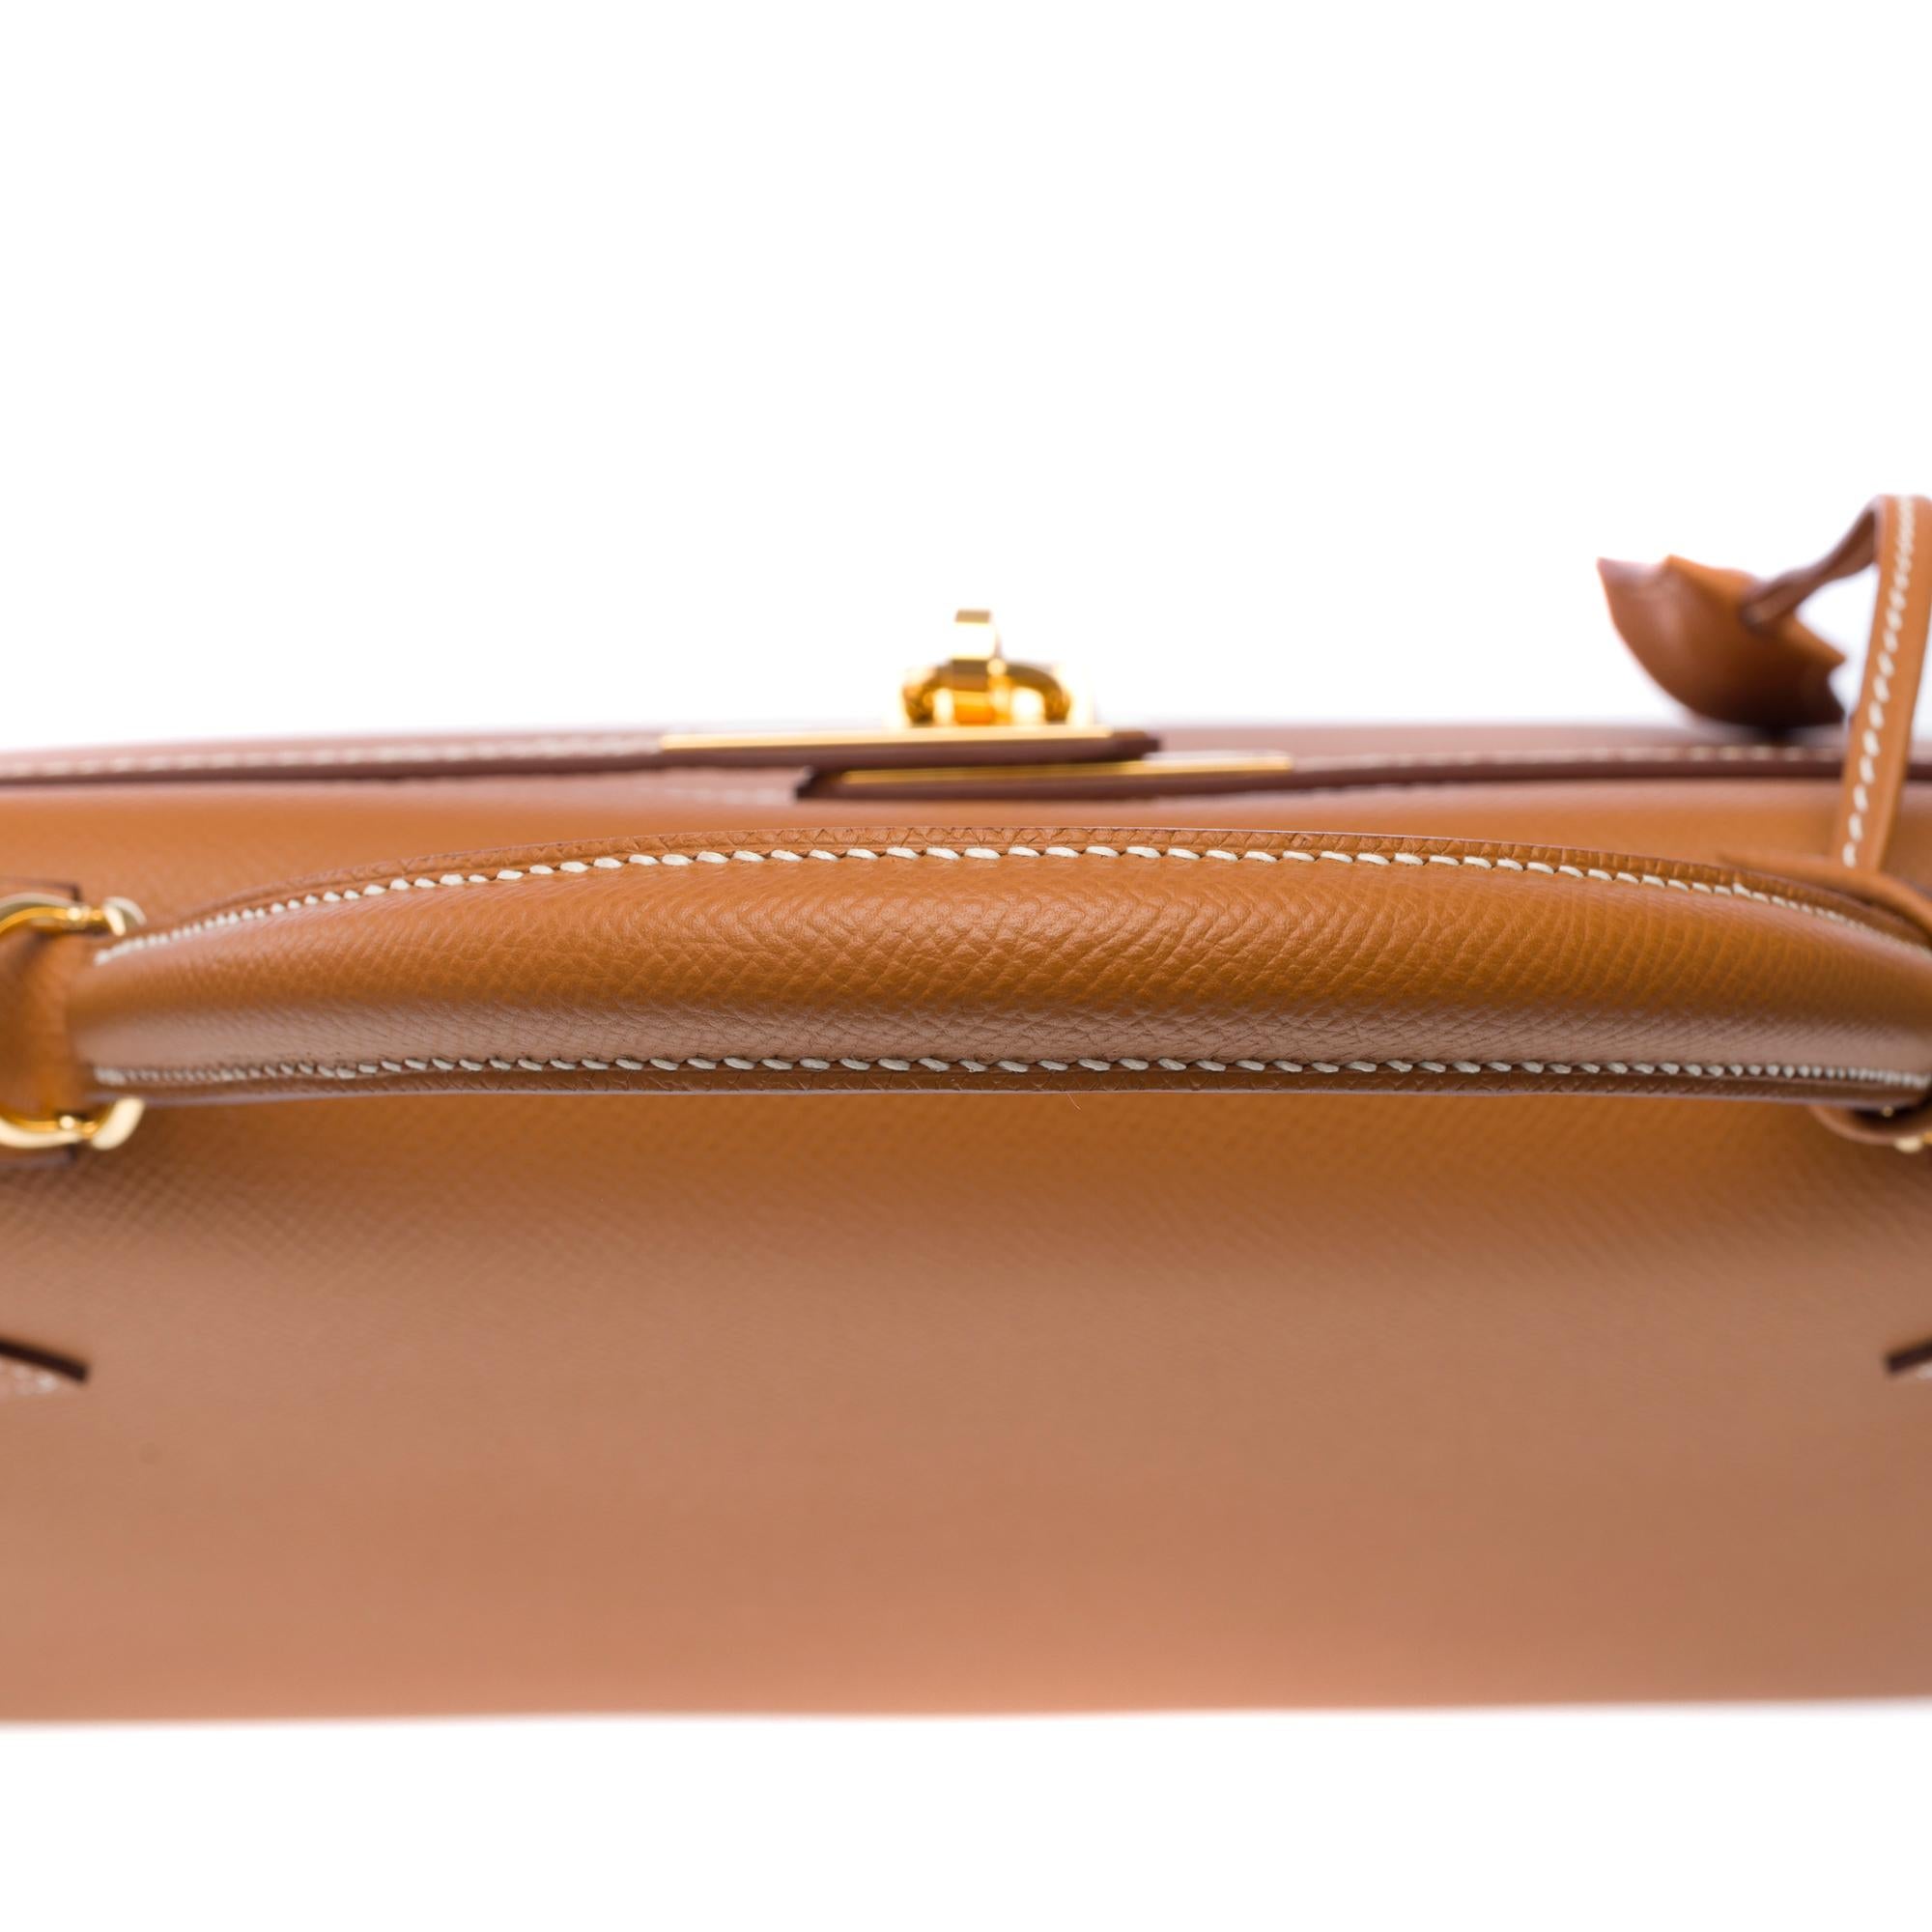 New Hermès Kelly 32 sellier handbag strap in Camel Epsom calf leather, GHW For Sale 6